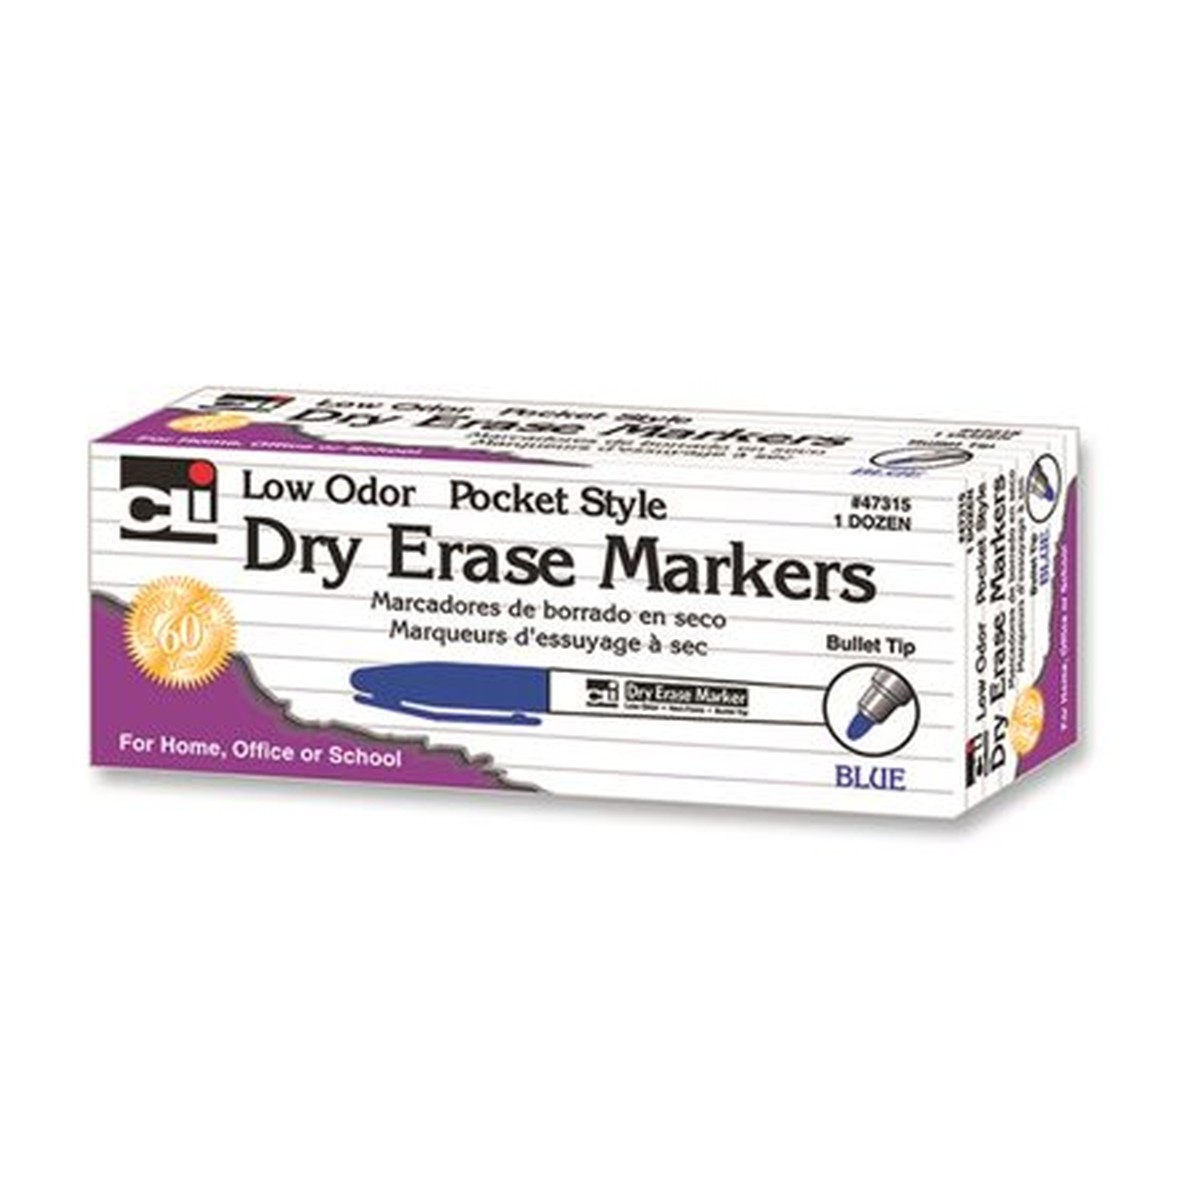 Dry Erase Markers, Pocket Style, Blue, Bullet Tip, Pack of 12